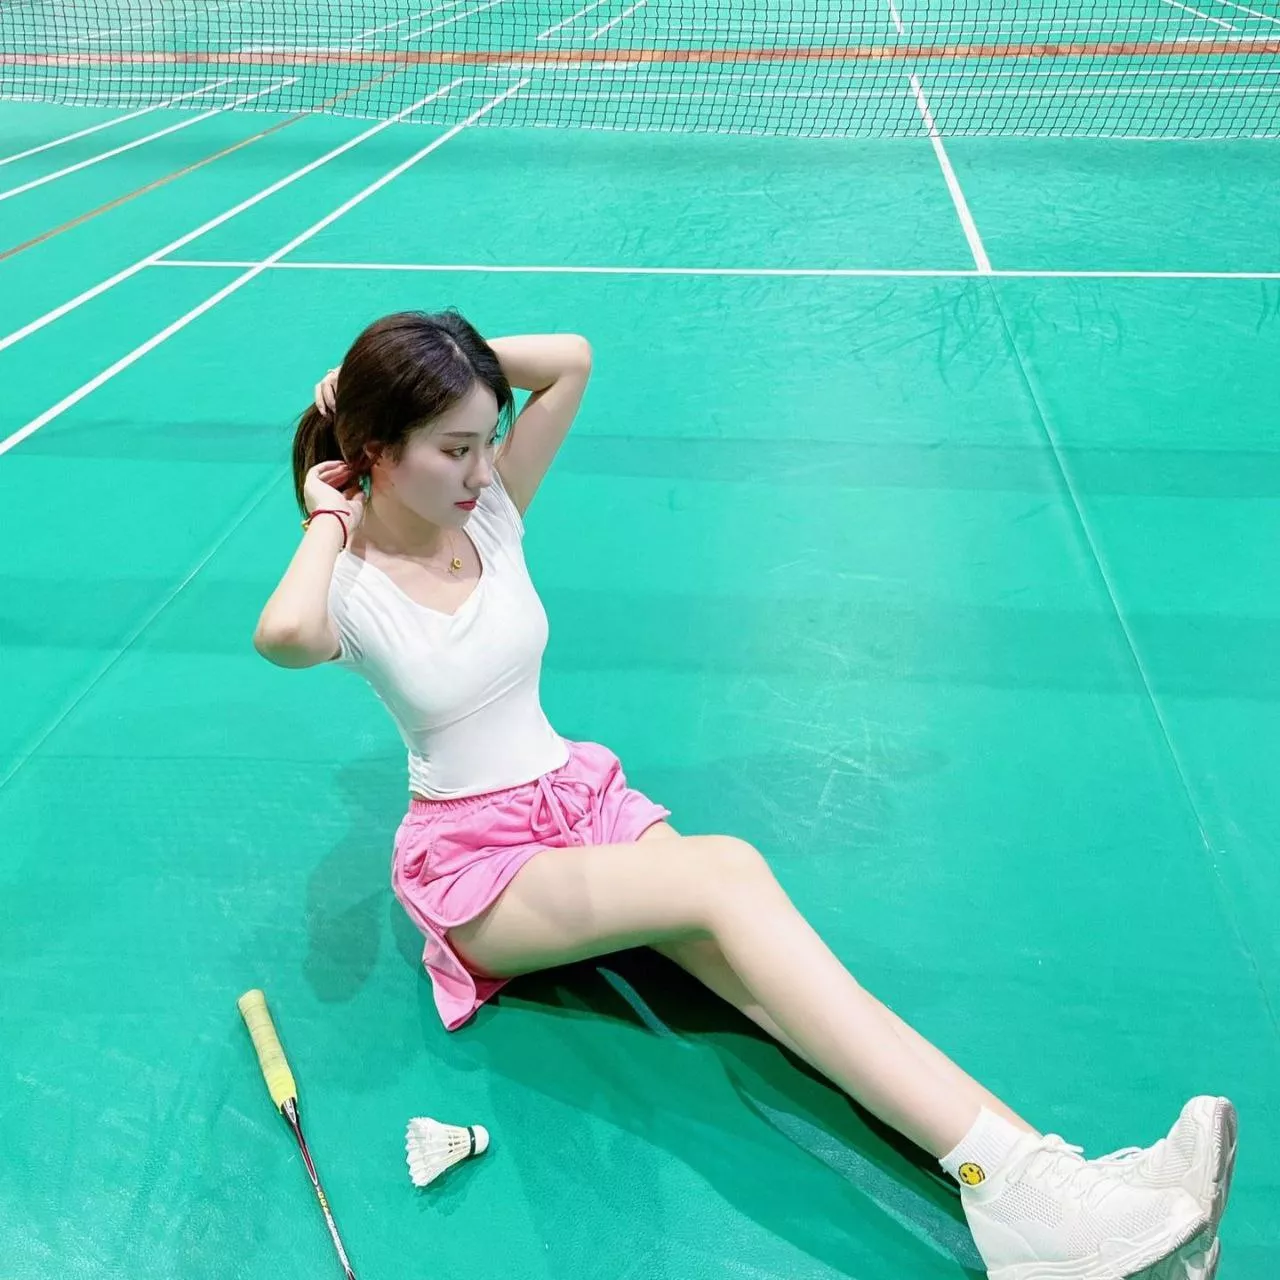 Badminton enthusiasts